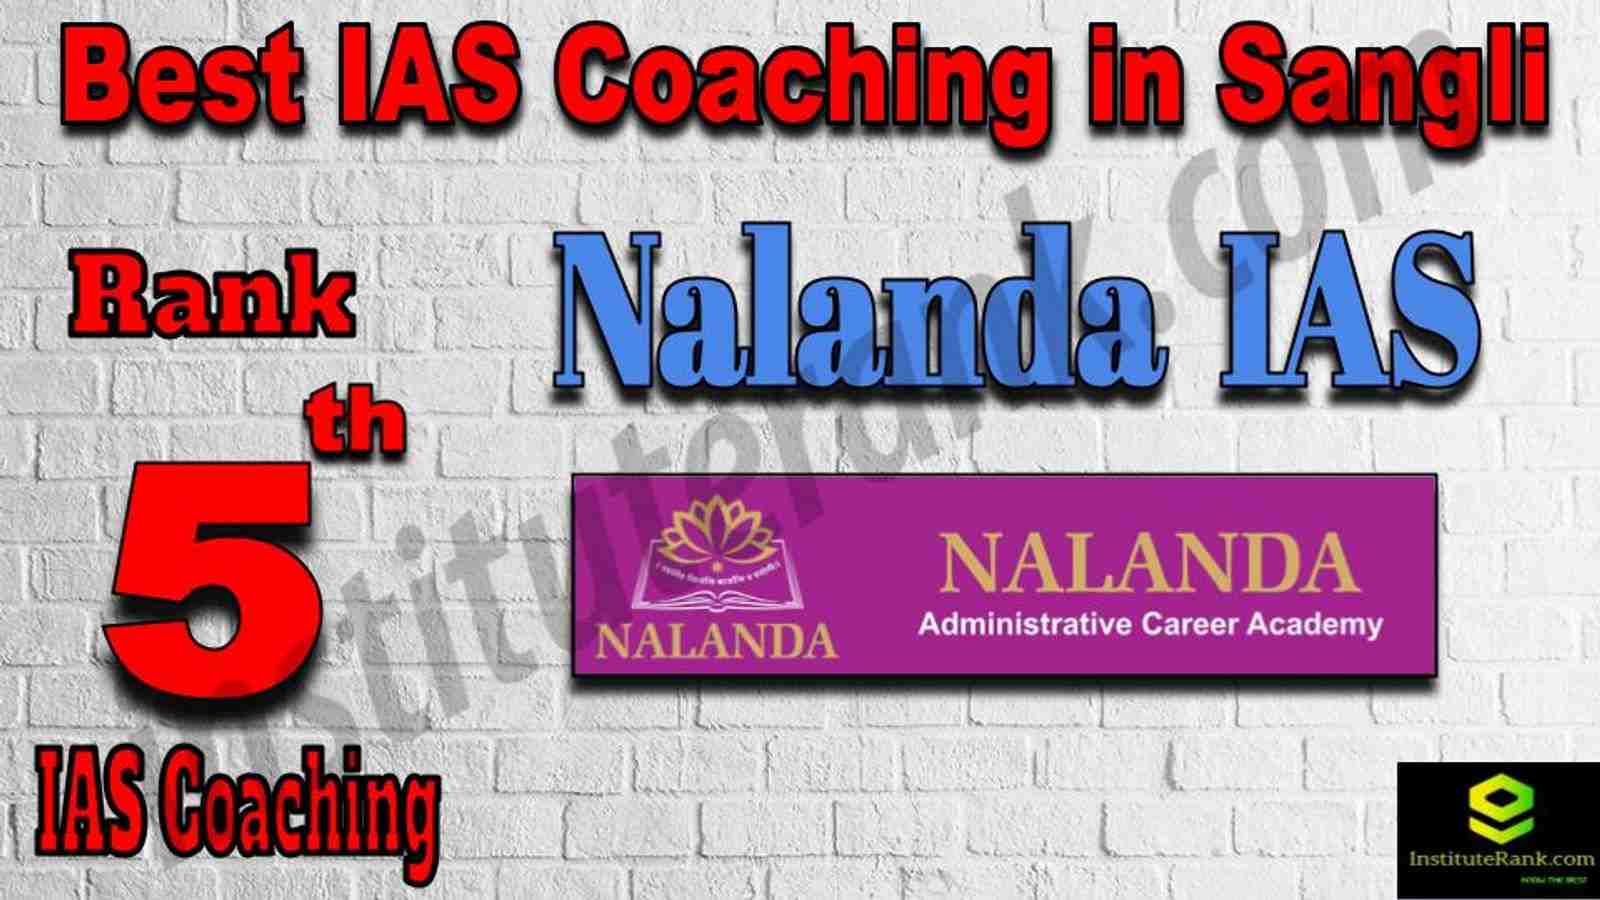 5th Best IAS Coaching in Sangli